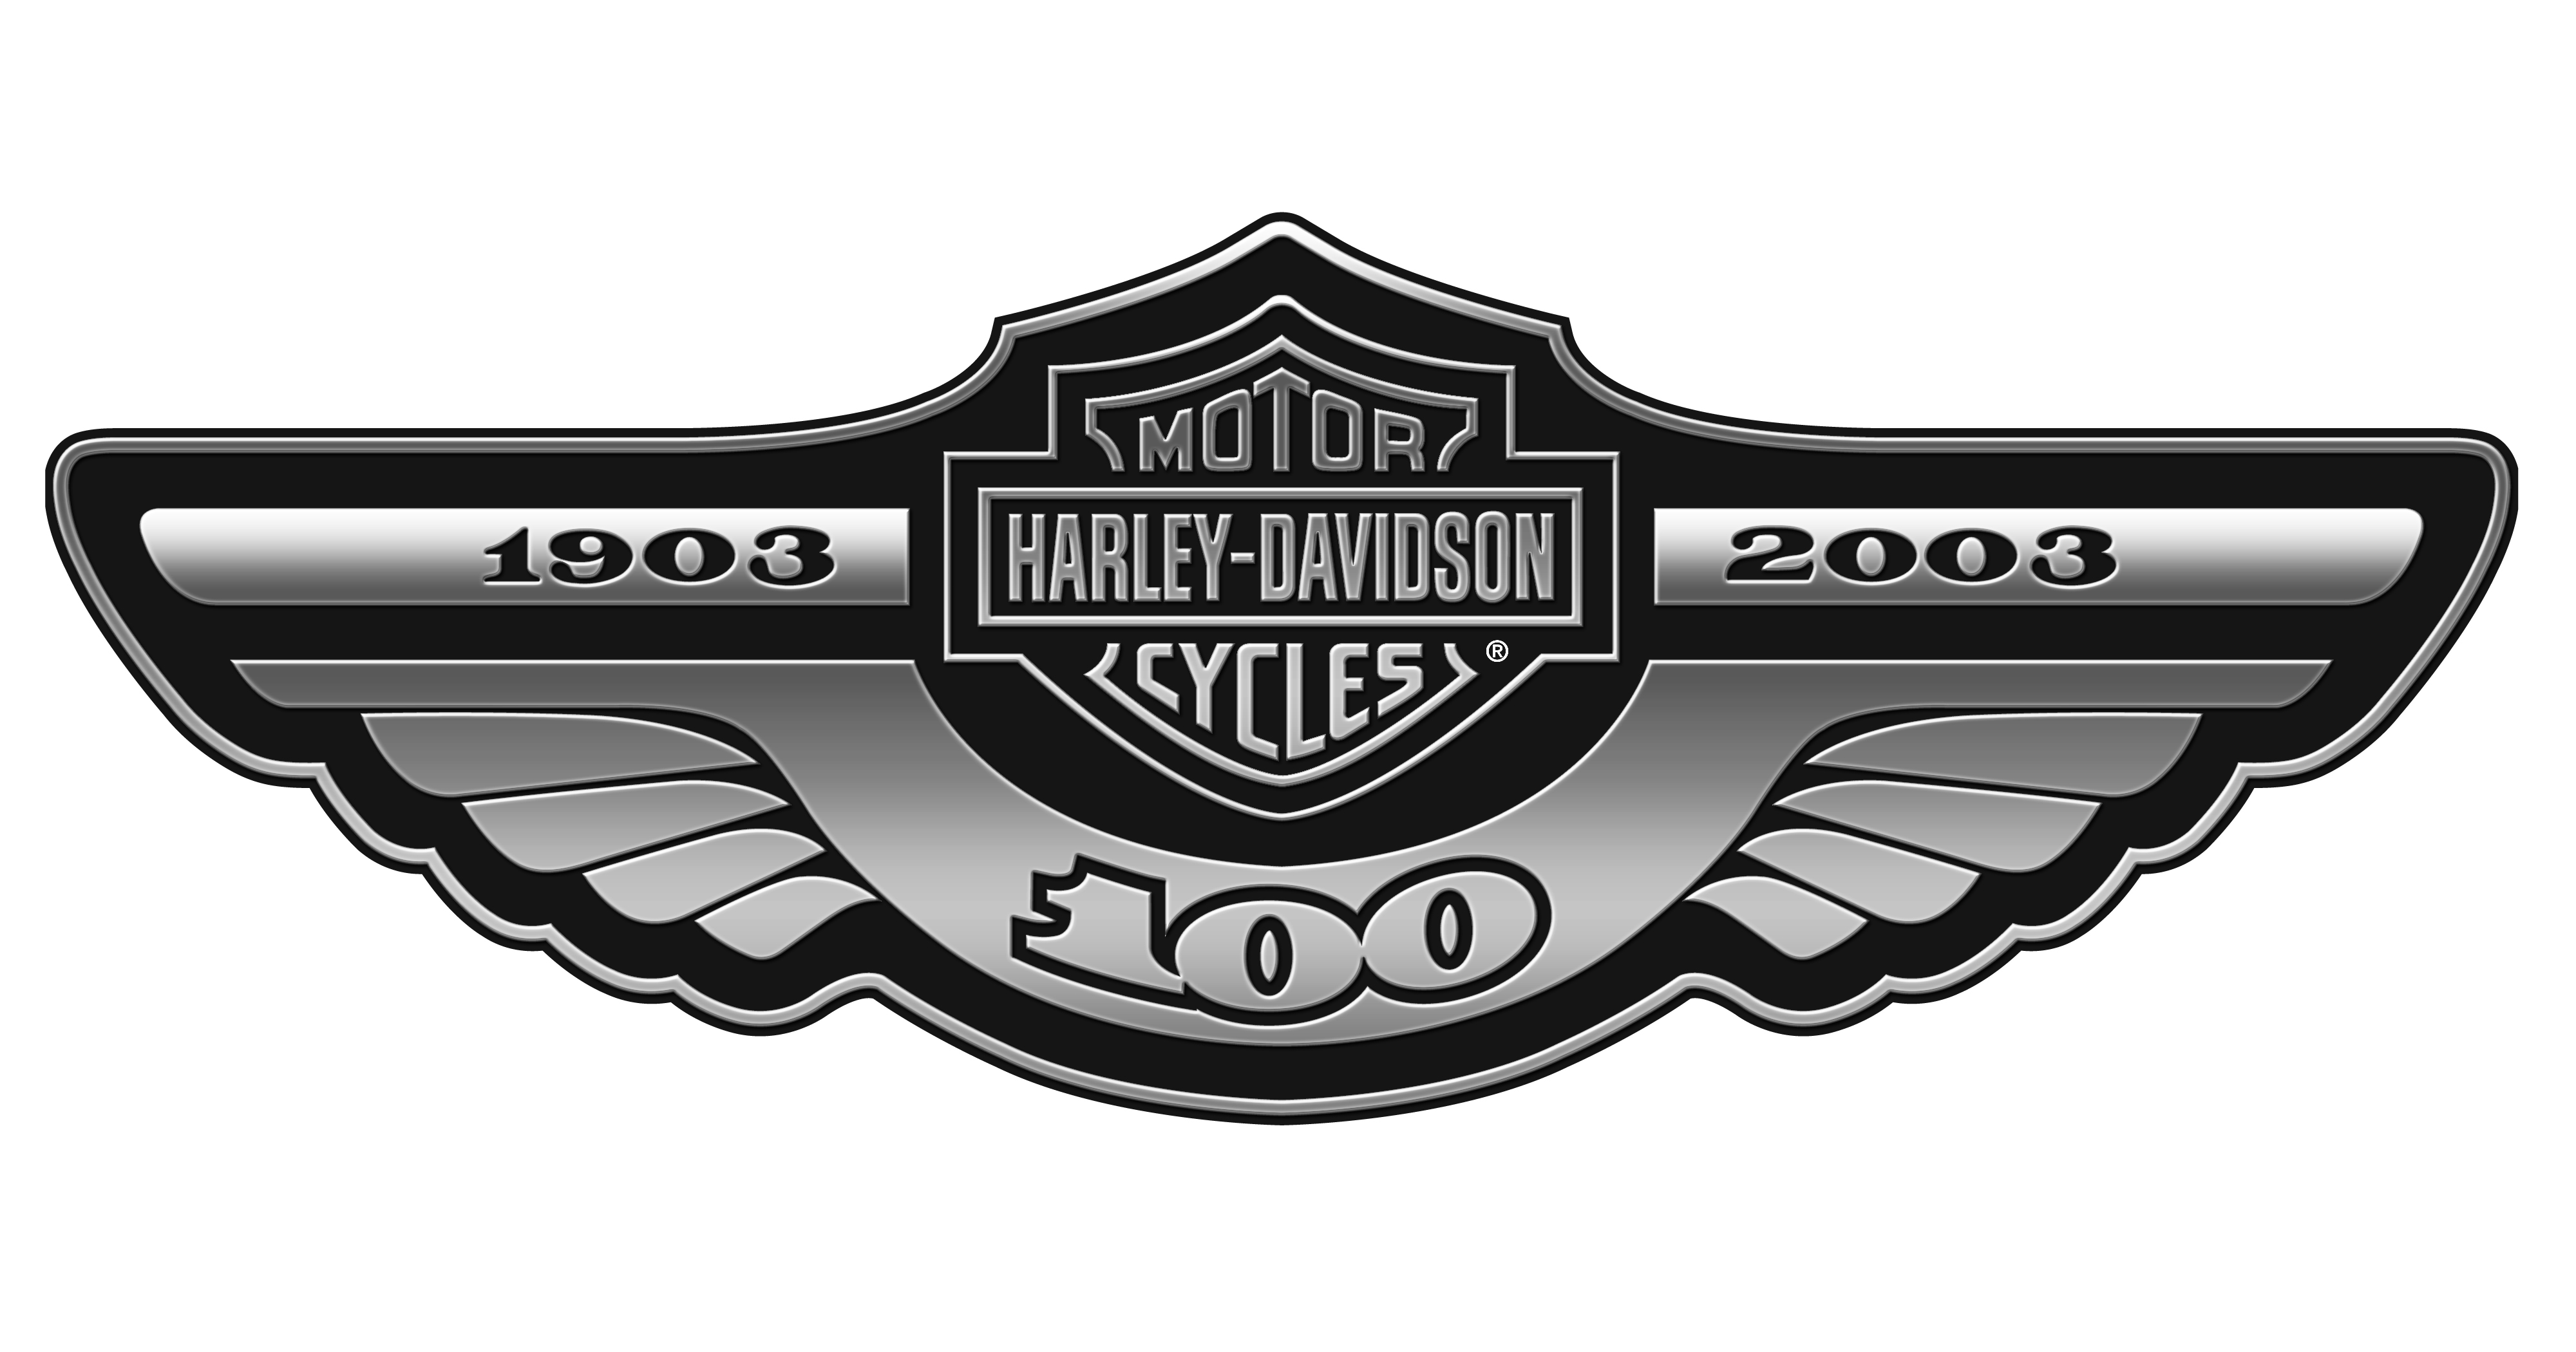 Harley davidson logo motorcycle brands jpg